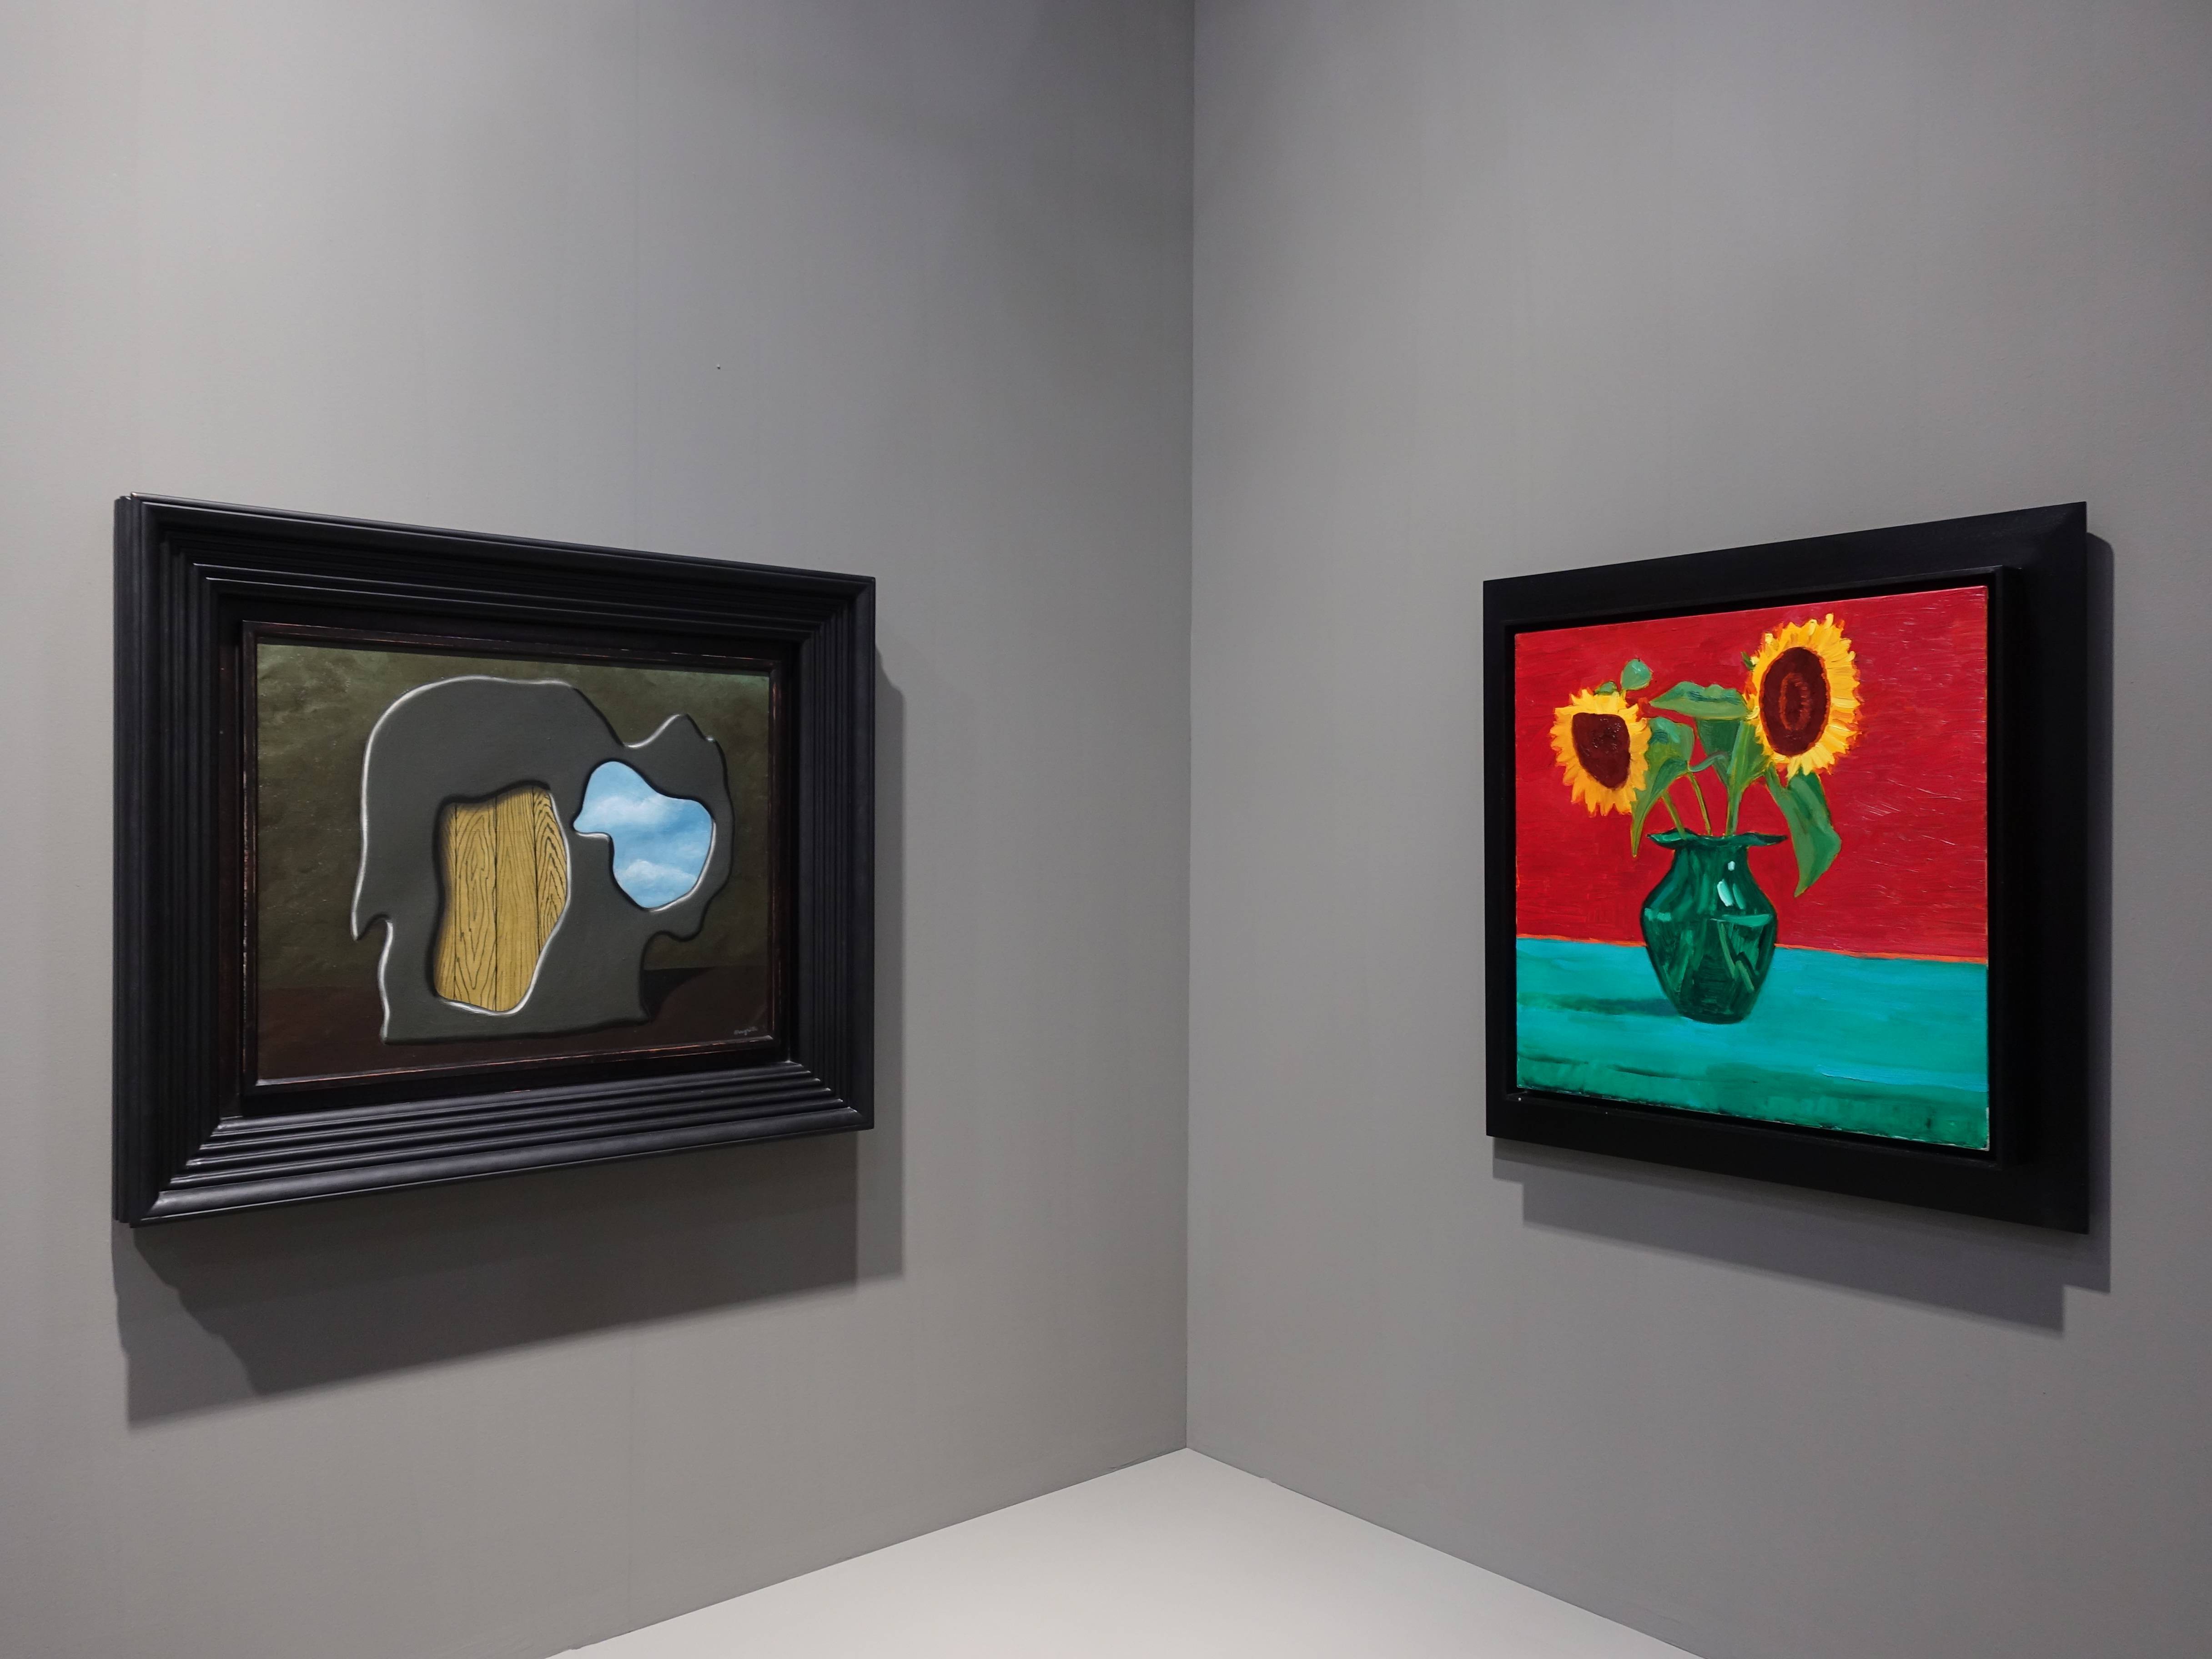 Richard Gray Gallery畫廊展出藝術家馬格利特作品(左)以及David hockney作品(右)。